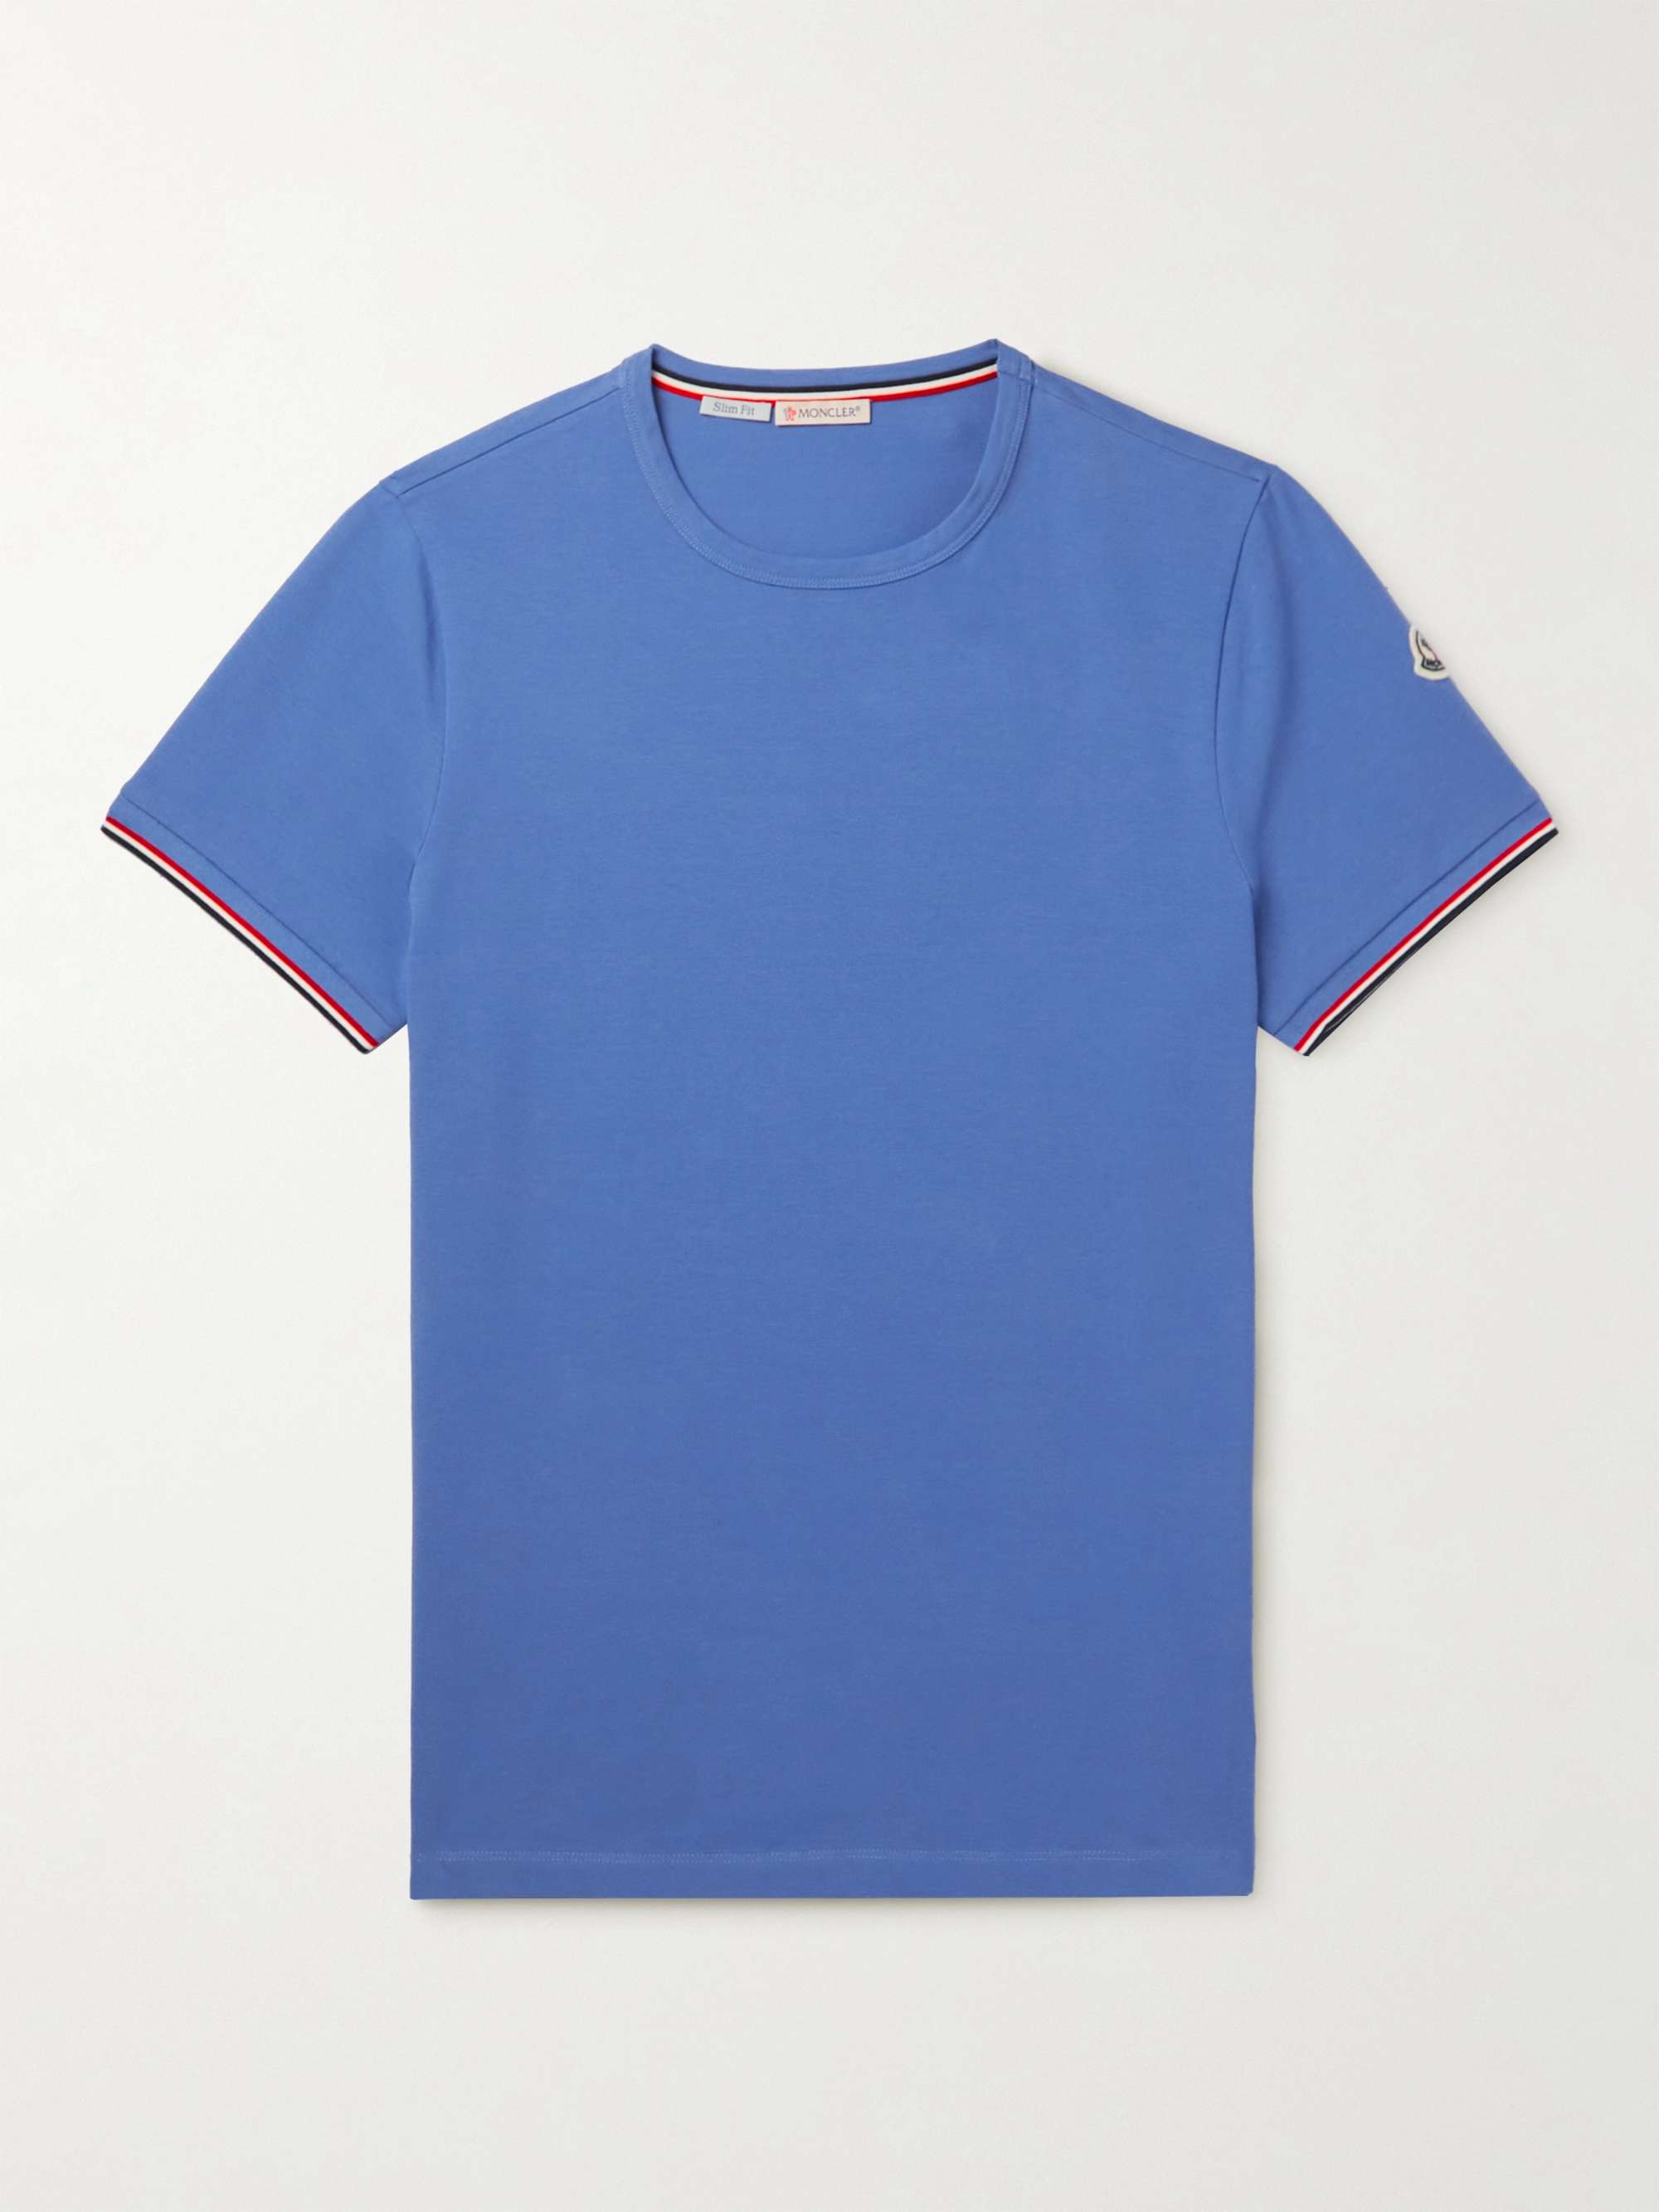 MONCLER Slim-Fit Logo-Appliquéd Stretch-Cotton Jersey T-Shirt | MR PORTER